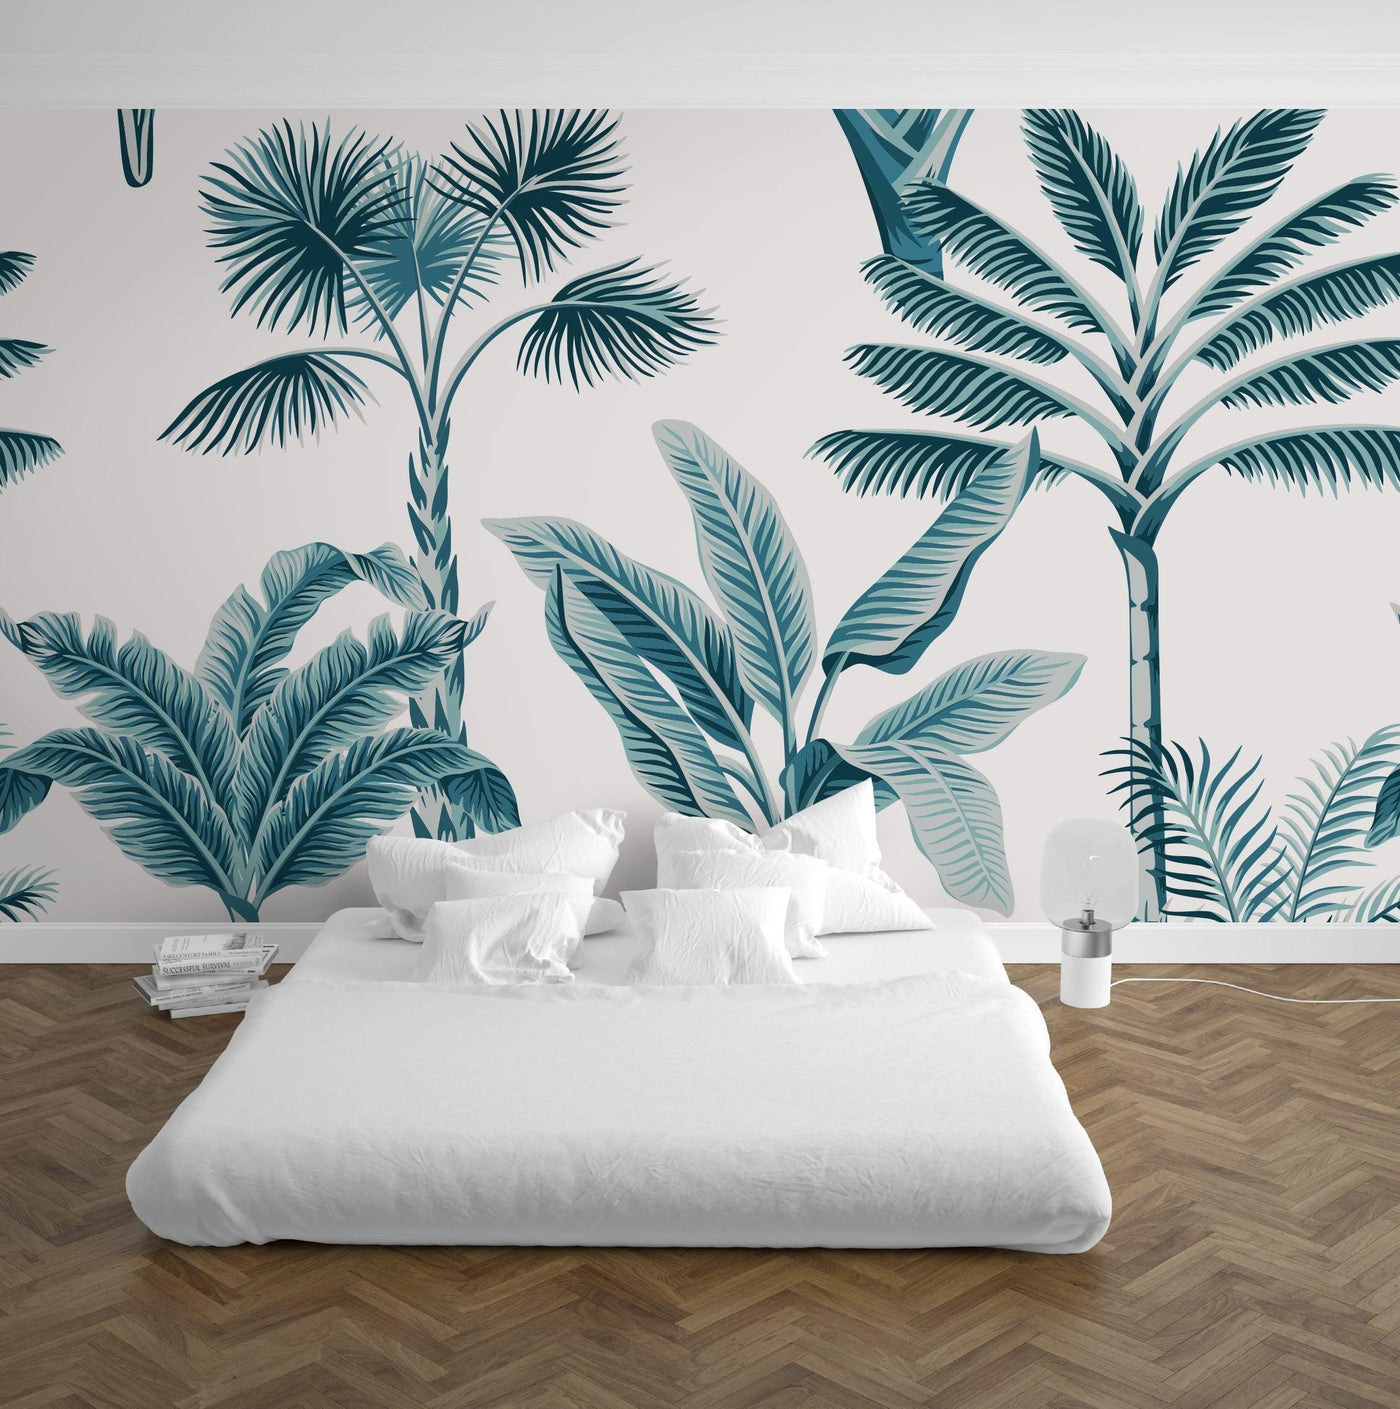 Sleek Palms Mural Wallpaper (m²)-Wall Decor-LEAF WALLPAPER, MURALS, MURALS / WALLPAPERS, NATURE WALL ART, NON-WOVEN WALLPAPER, PALM WALLPAPER, TROPICAL MURAL, TROPICAL WALLPAPERS-Forest Homes-Nature inspired decor-Nature decor